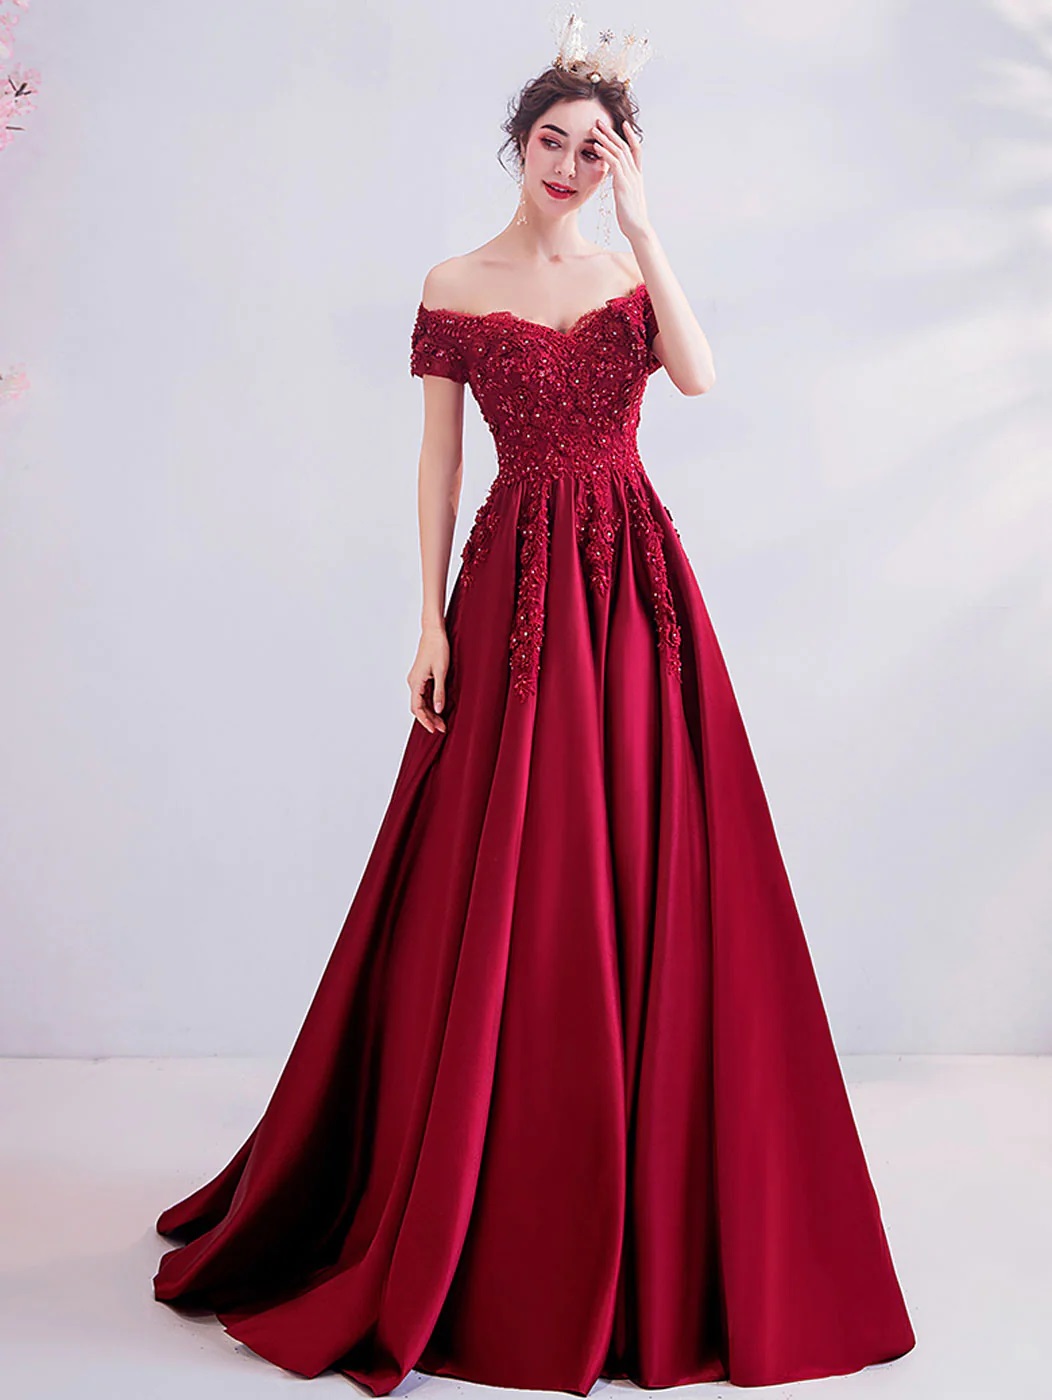 Burgundy A-line Applique Lace Long Prom Dresses, Burgundy Evening Dresses